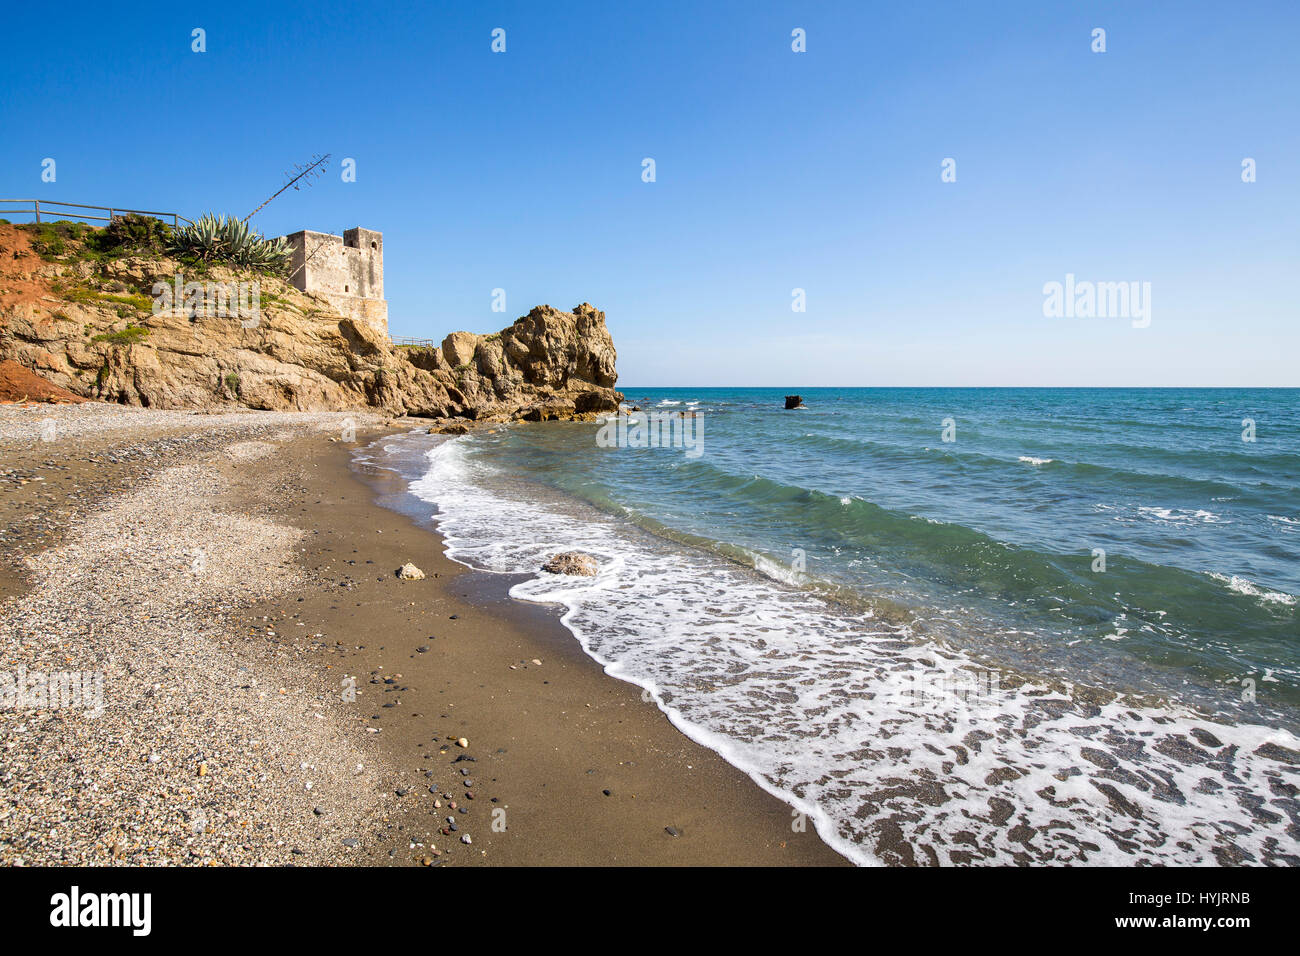 Torre de la Sal or Salto de la Mora. Beach Playa Ancha, Casares. Malaga province Costa del Sol. Andalusia Southern Spain, Europe Stock Photo